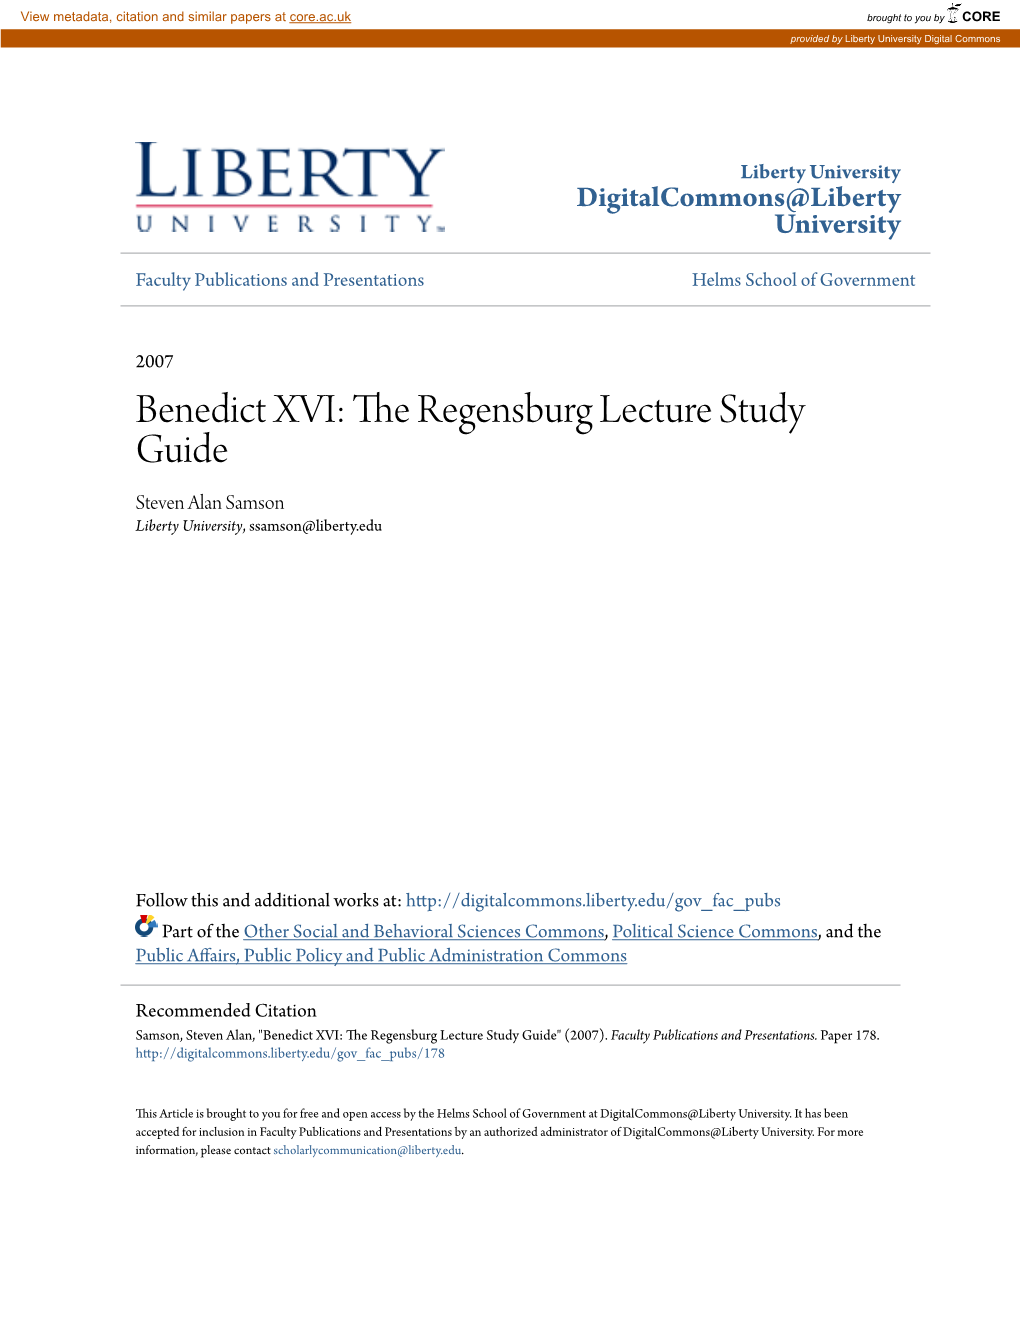 Benedict XVI: the Regensburg Lecture Study Guide Steven Alan Samson Liberty University, Ssamson@Liberty.Edu